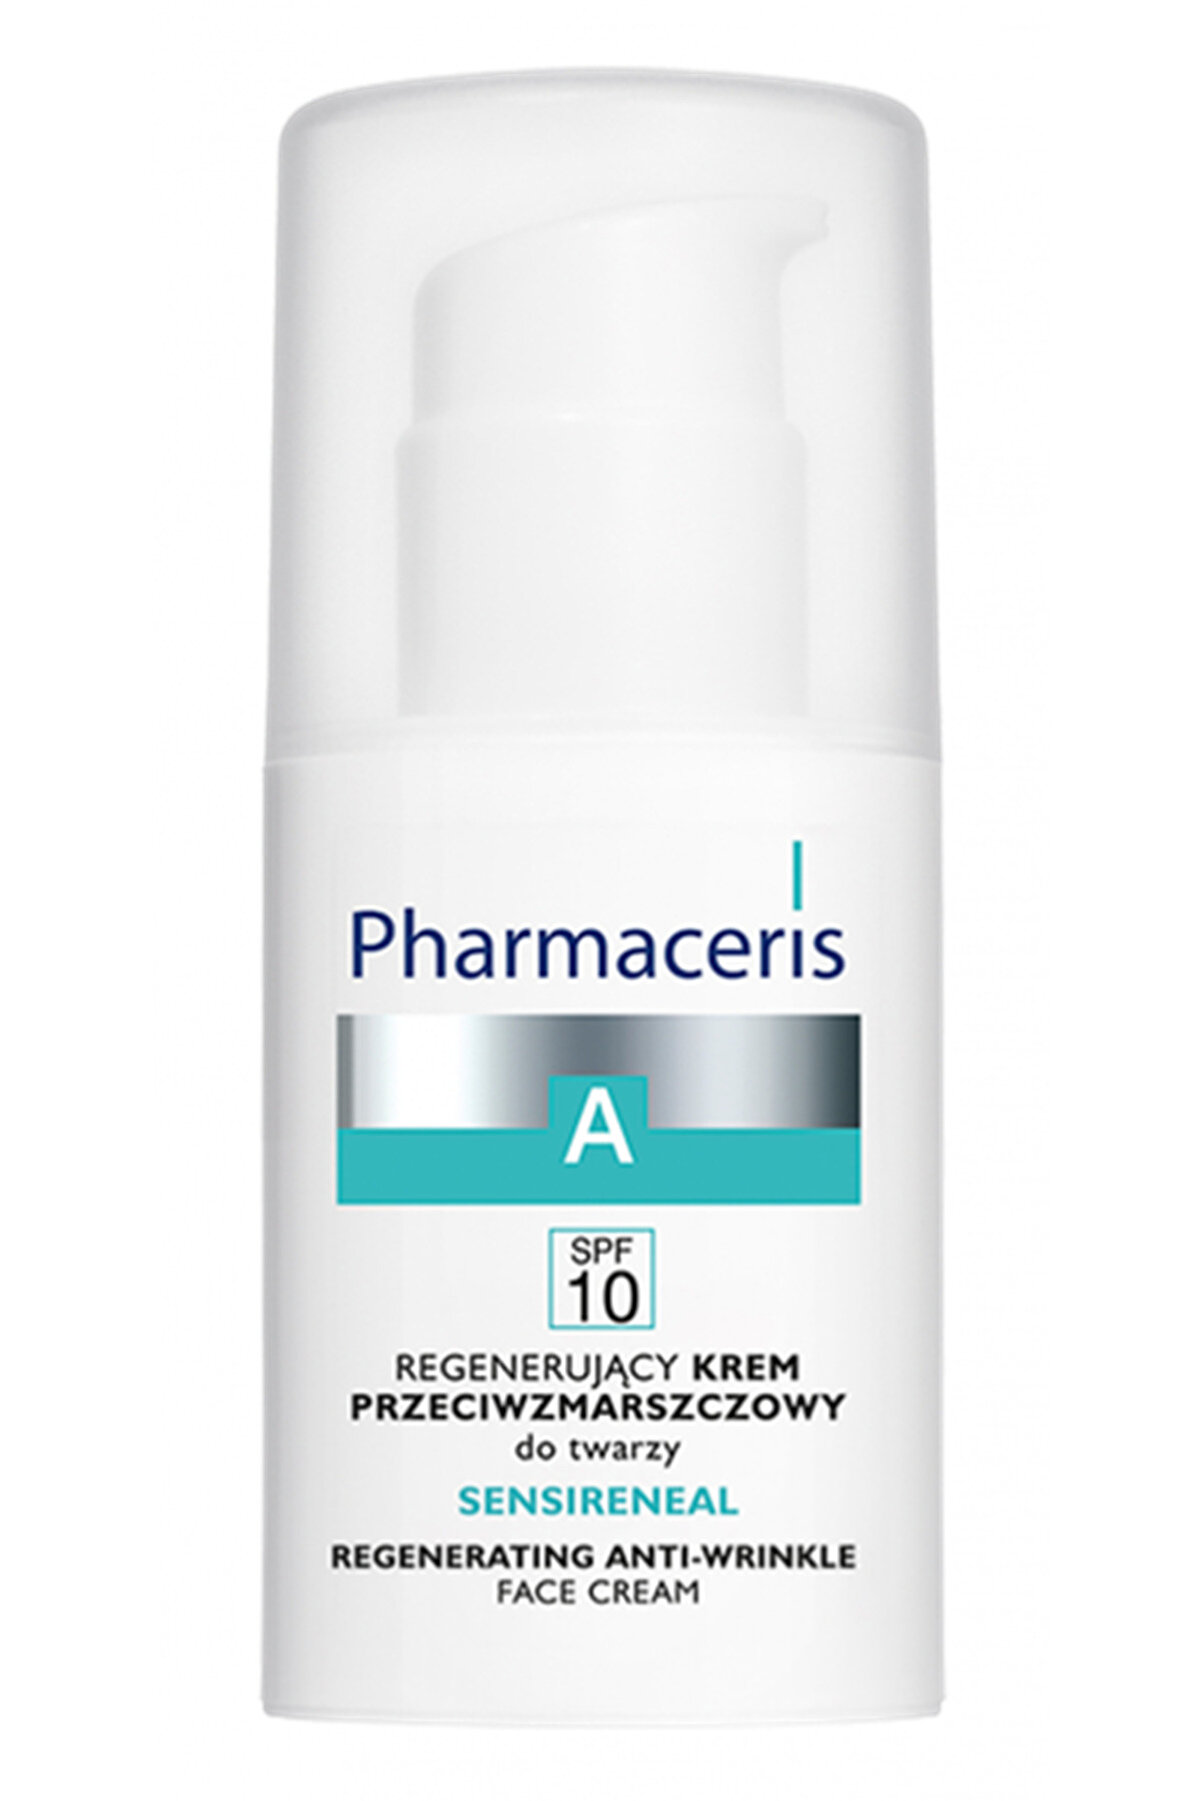 Pharmaceris Sensireneal Regenerating Anti-wrinkle Face Cream Spf 10 30 ml